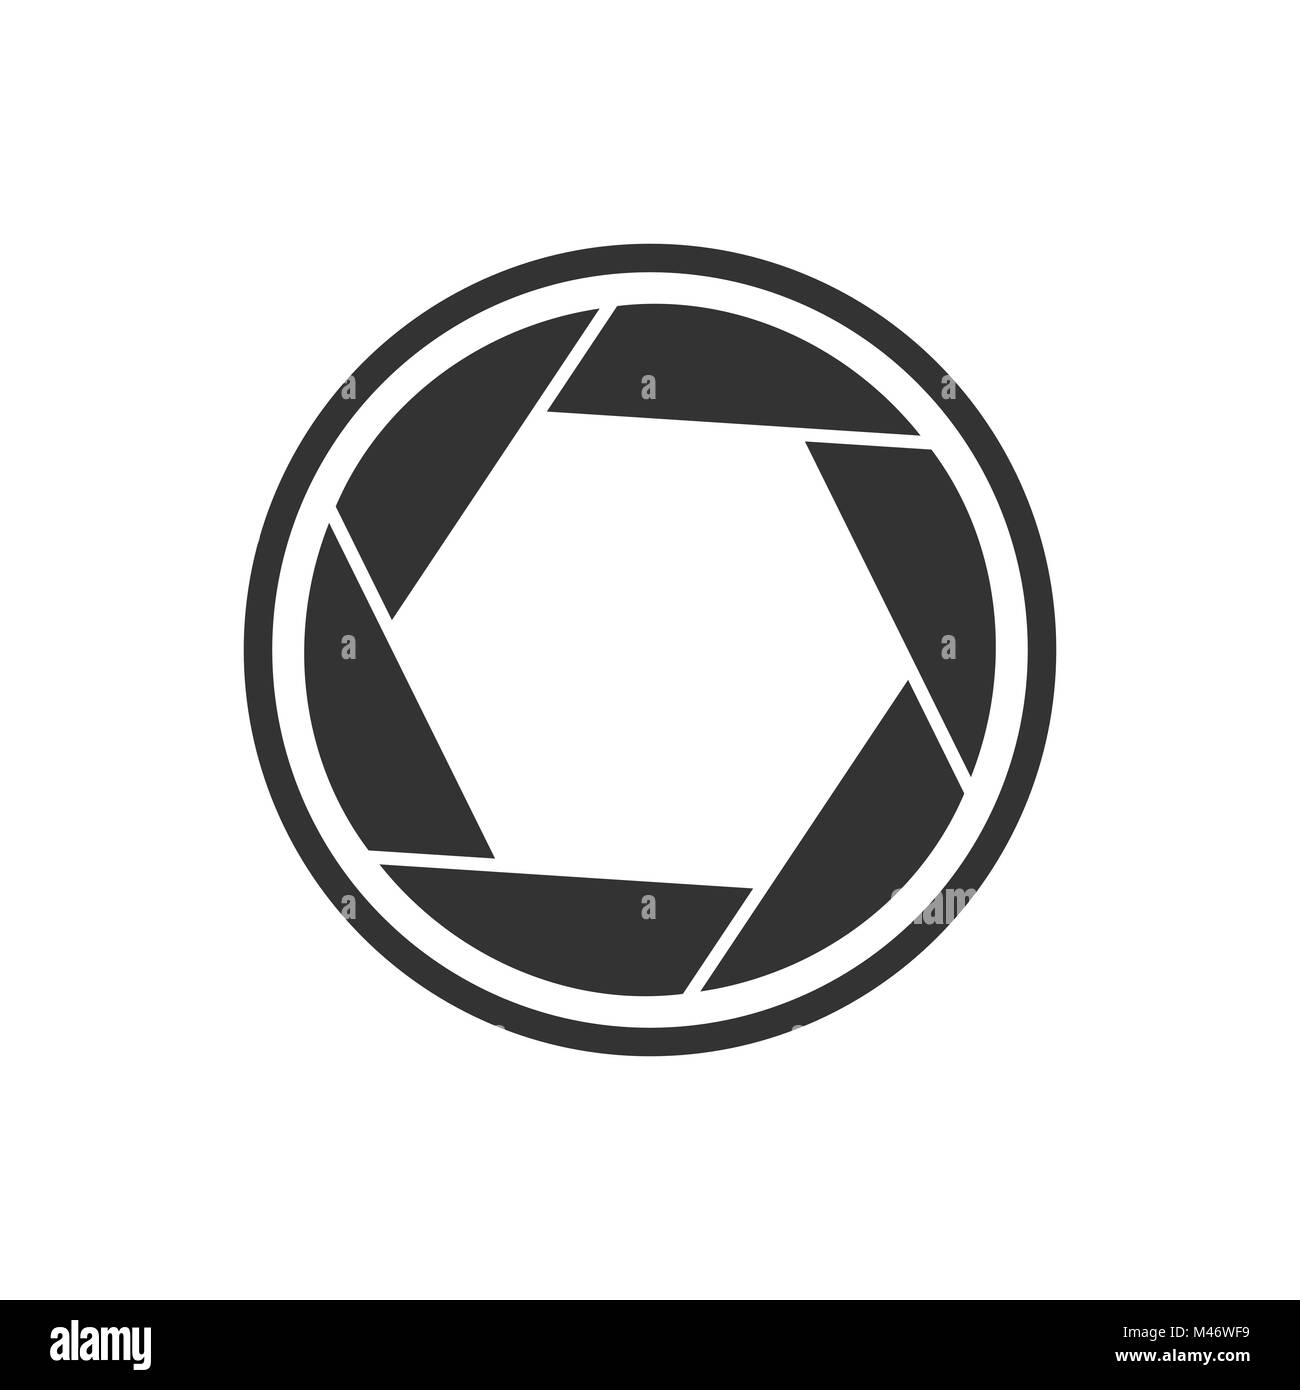 Shutter Simple Basic Shape Symbol Vector Graphic Logo Design Stock Vector